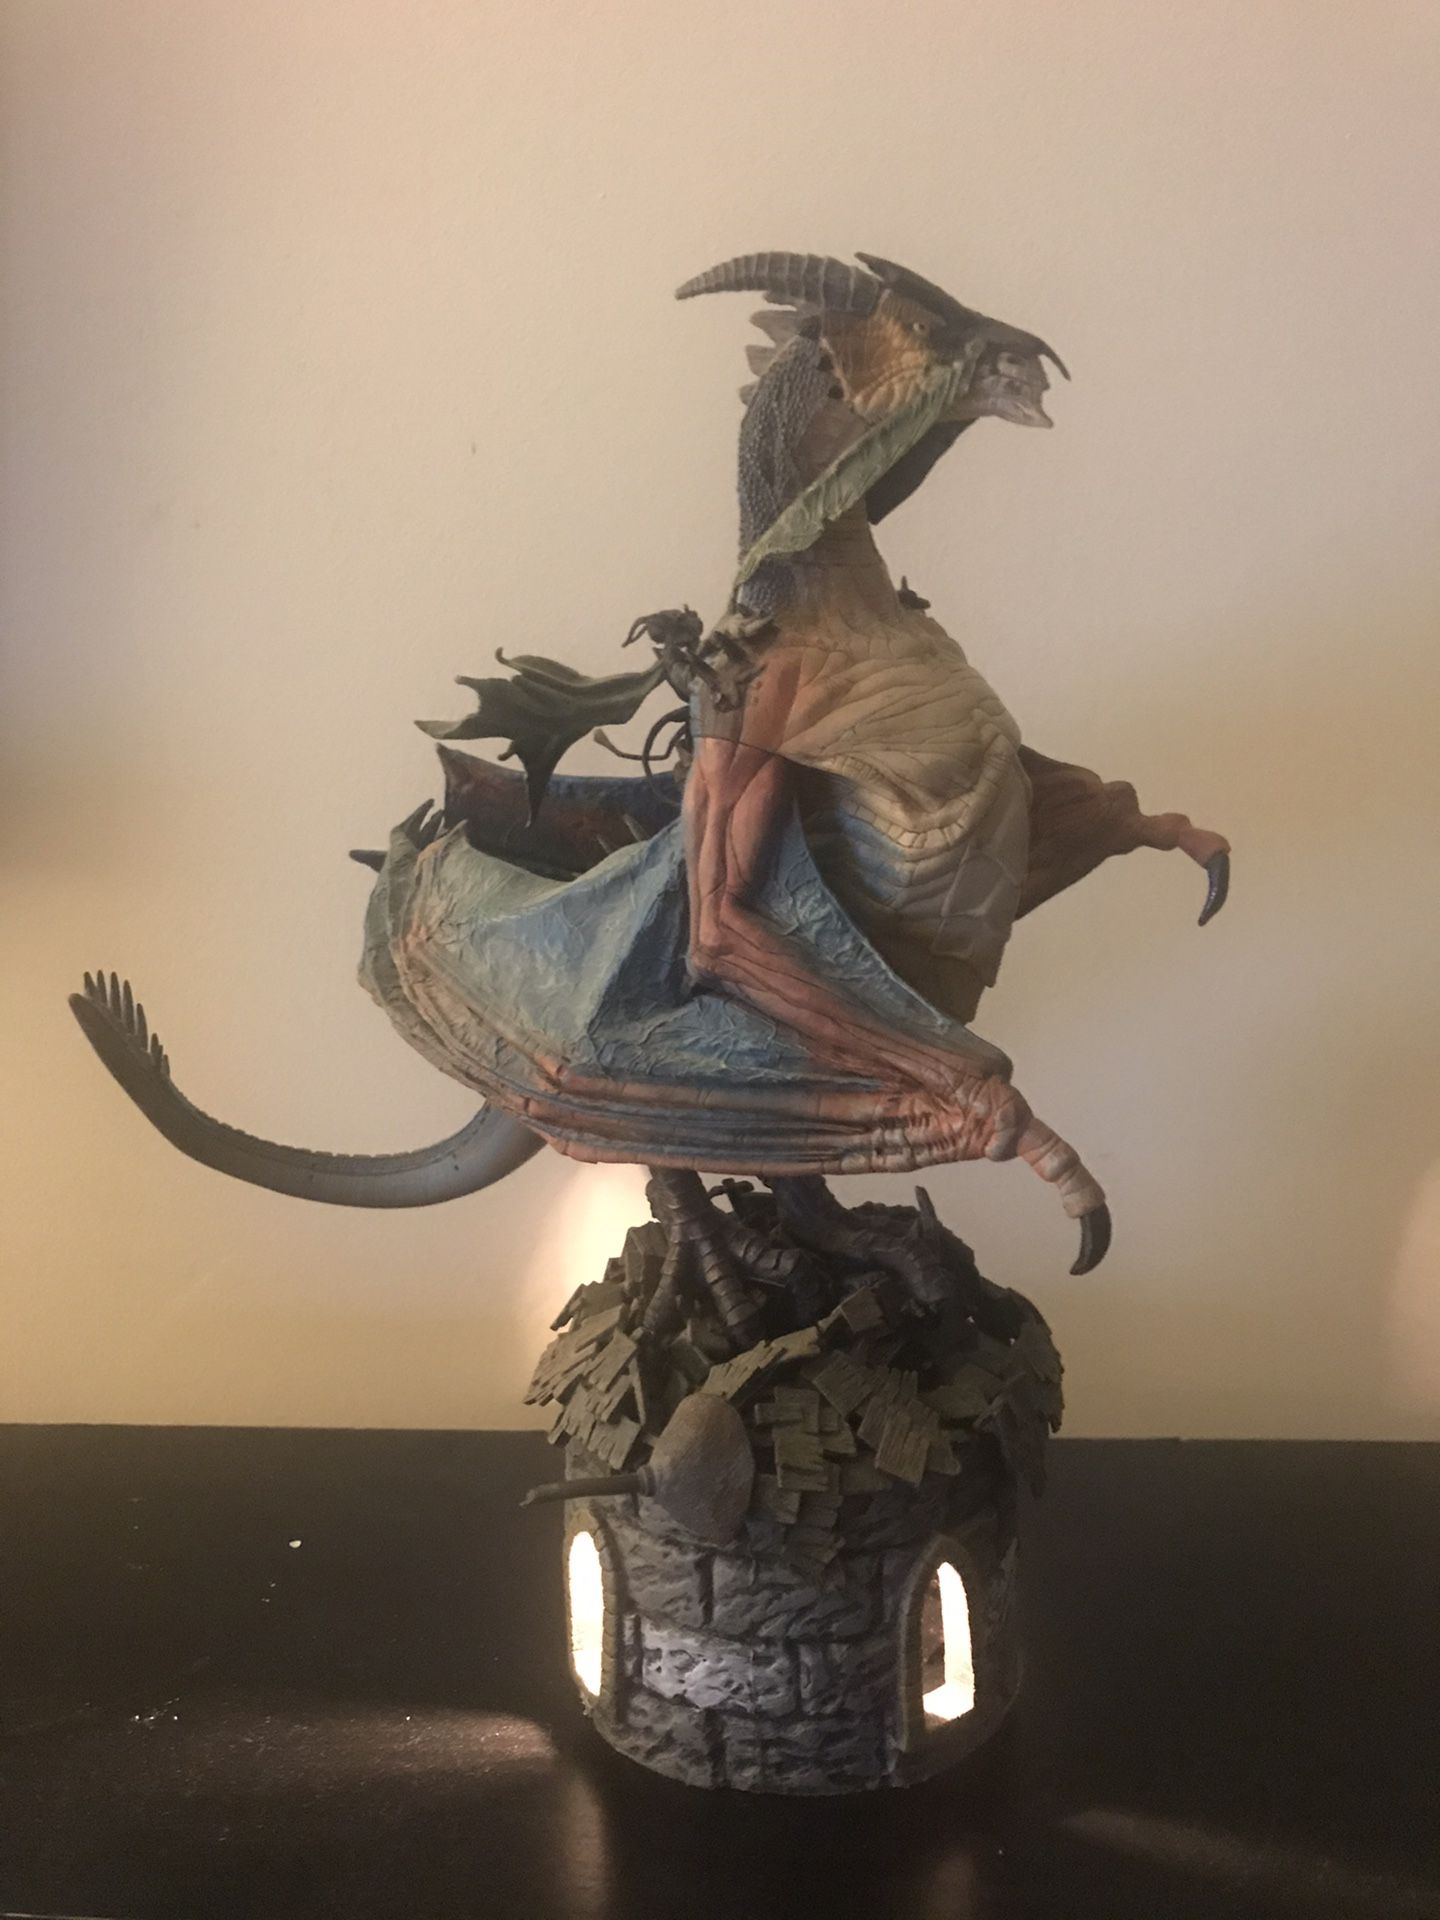 McFarlane’s Dragon statue